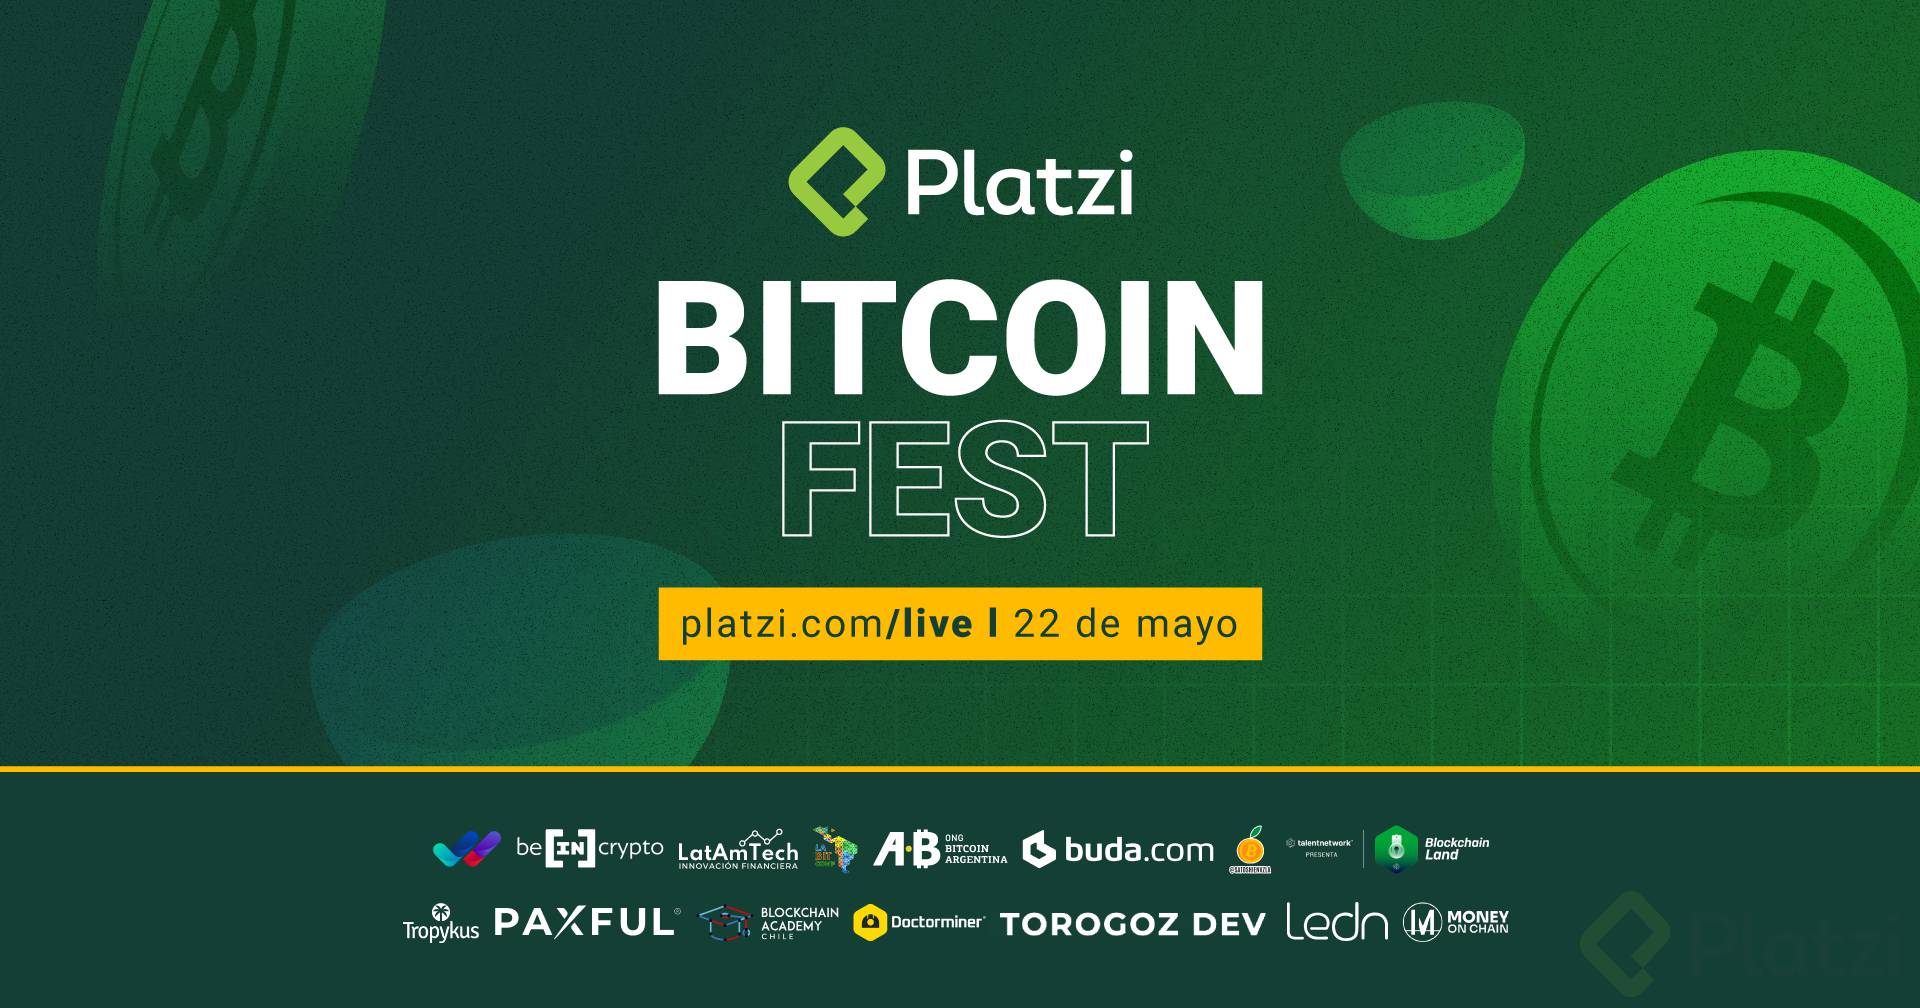 Platzi-Bitcoin-Fest-patrocinios.png